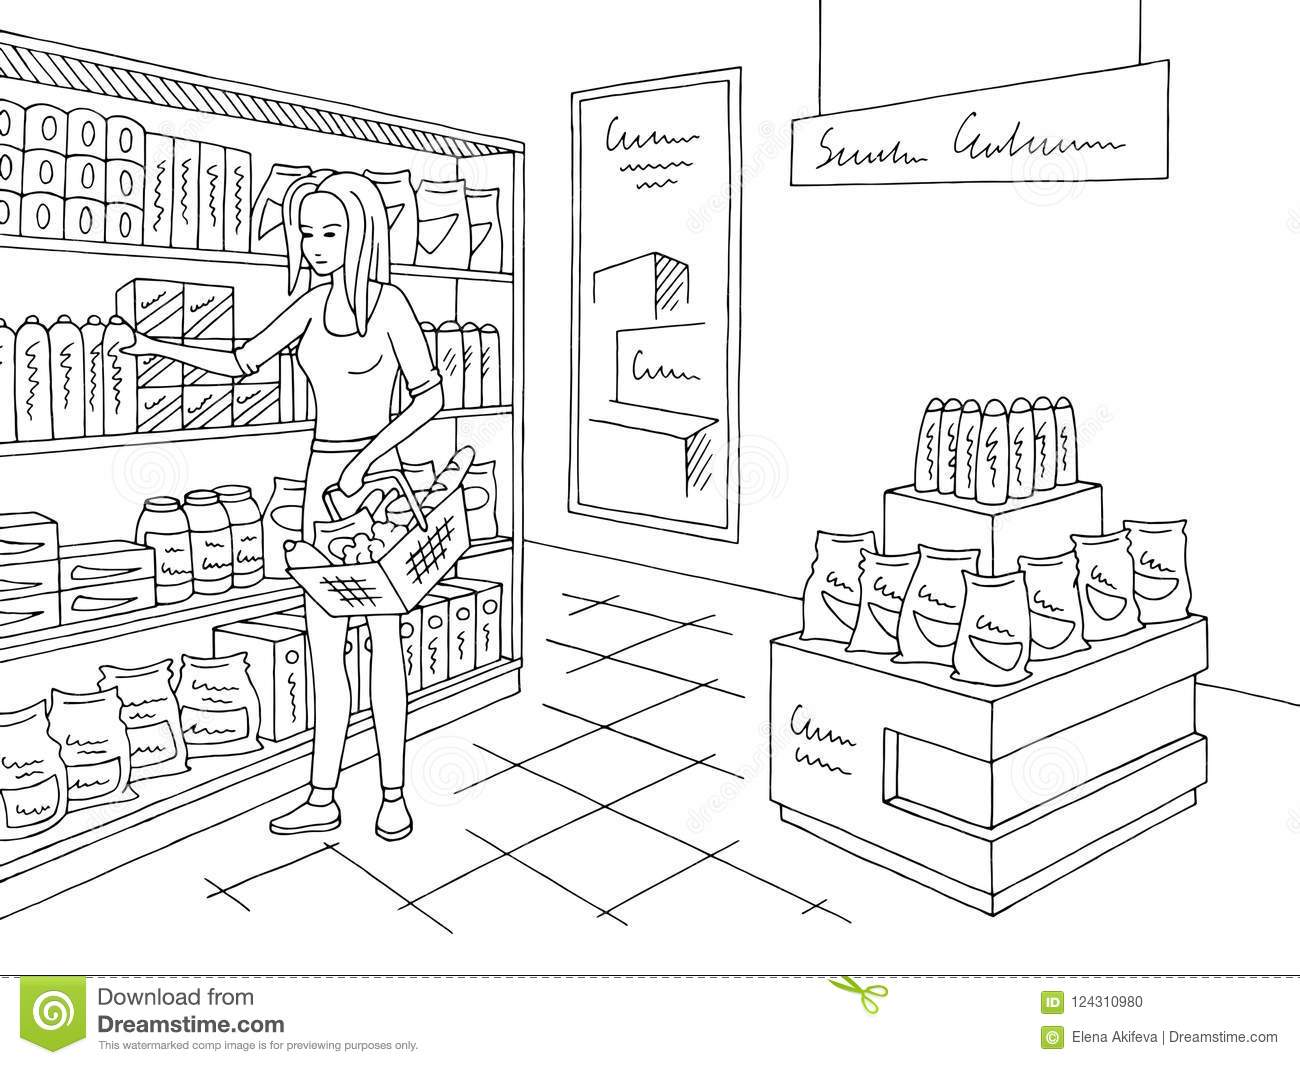 Grocery Store Shop Interior Black White Graphic Sketch Illustration.